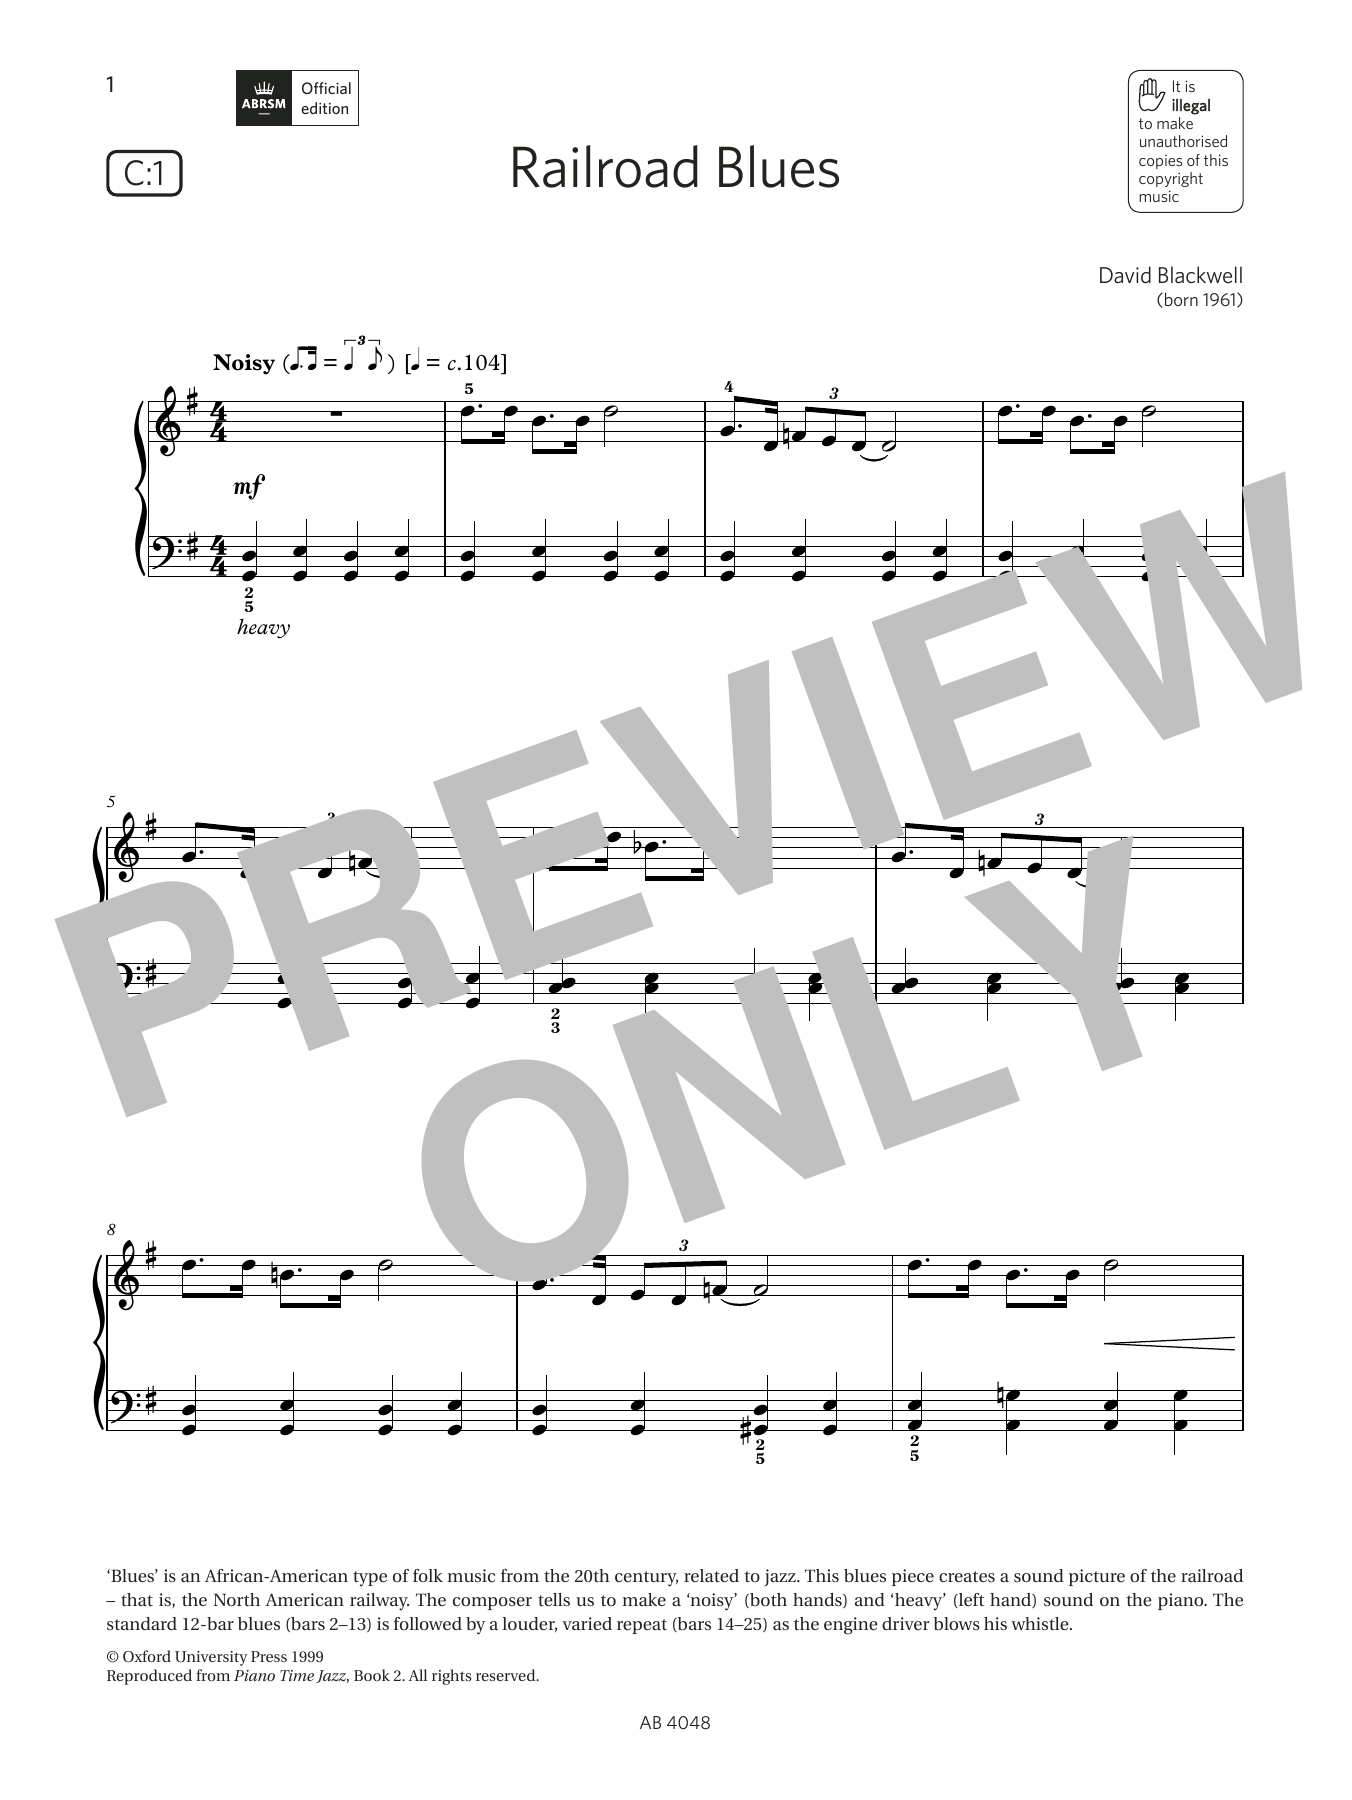 Download David Blackwell Railroad Blues (Grade 2, list C1, from Sheet Music